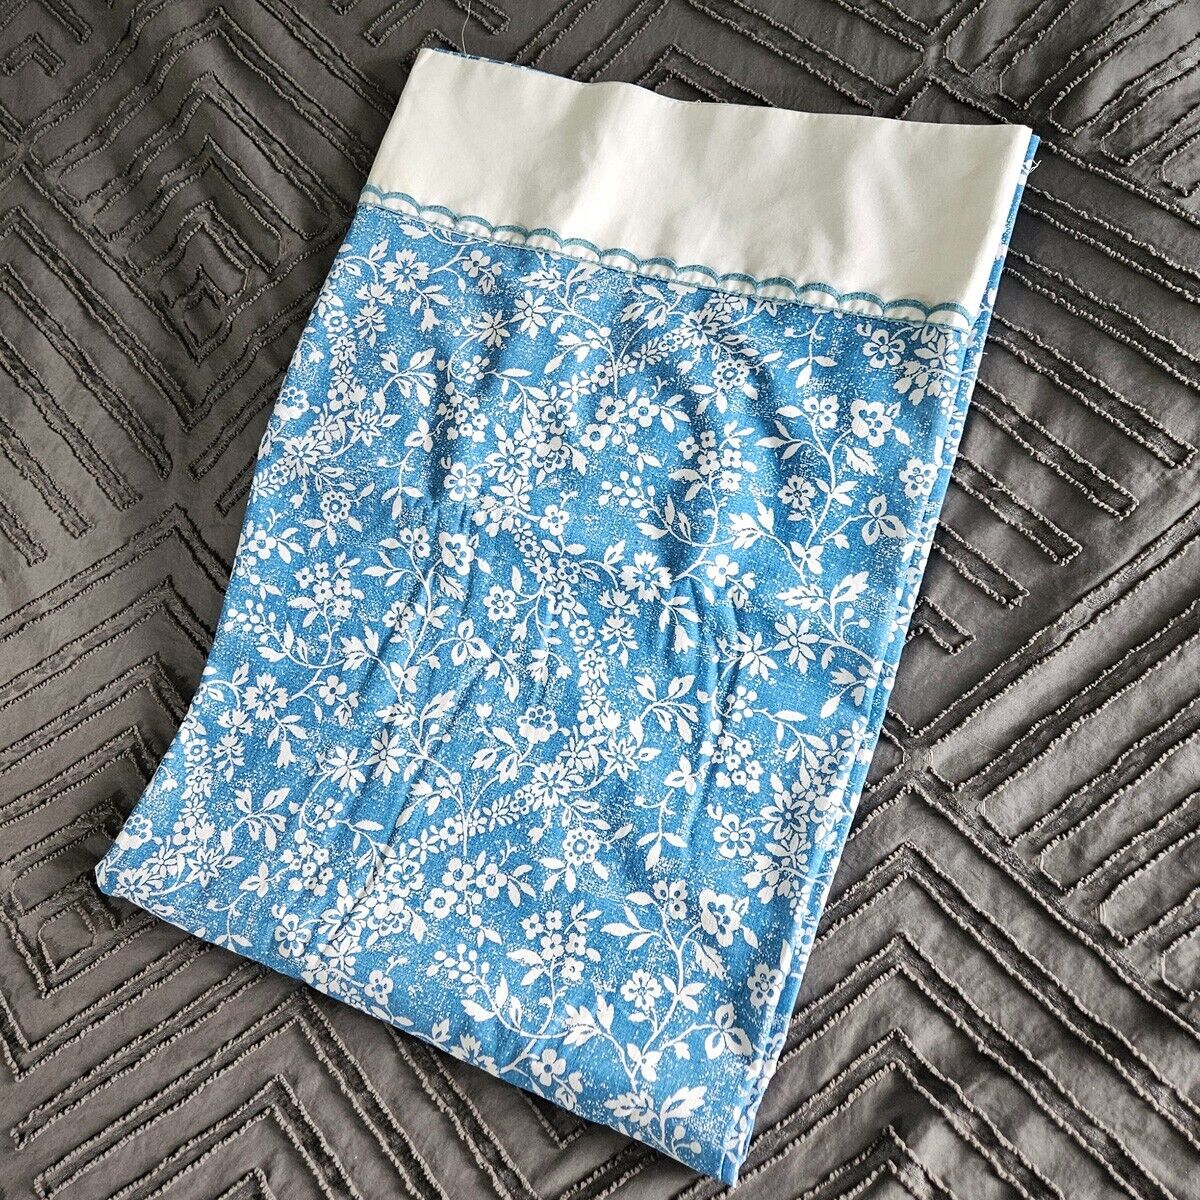 Vintage TWIN FLAT Blue White Floral Sheet